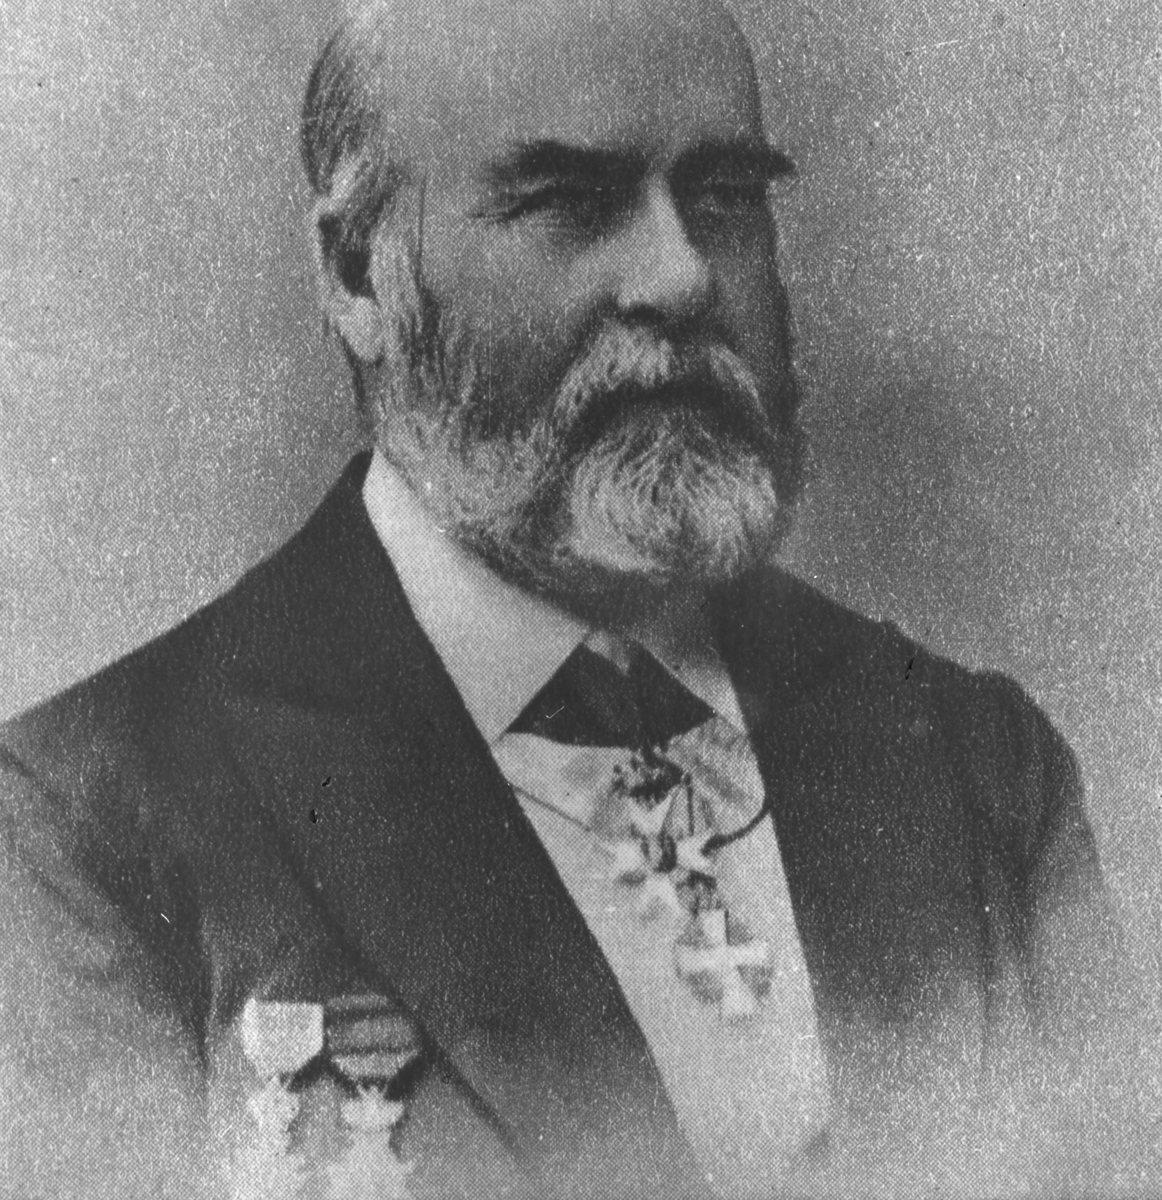 Svenson, Göthe Wilhelm (1828 - 1906)